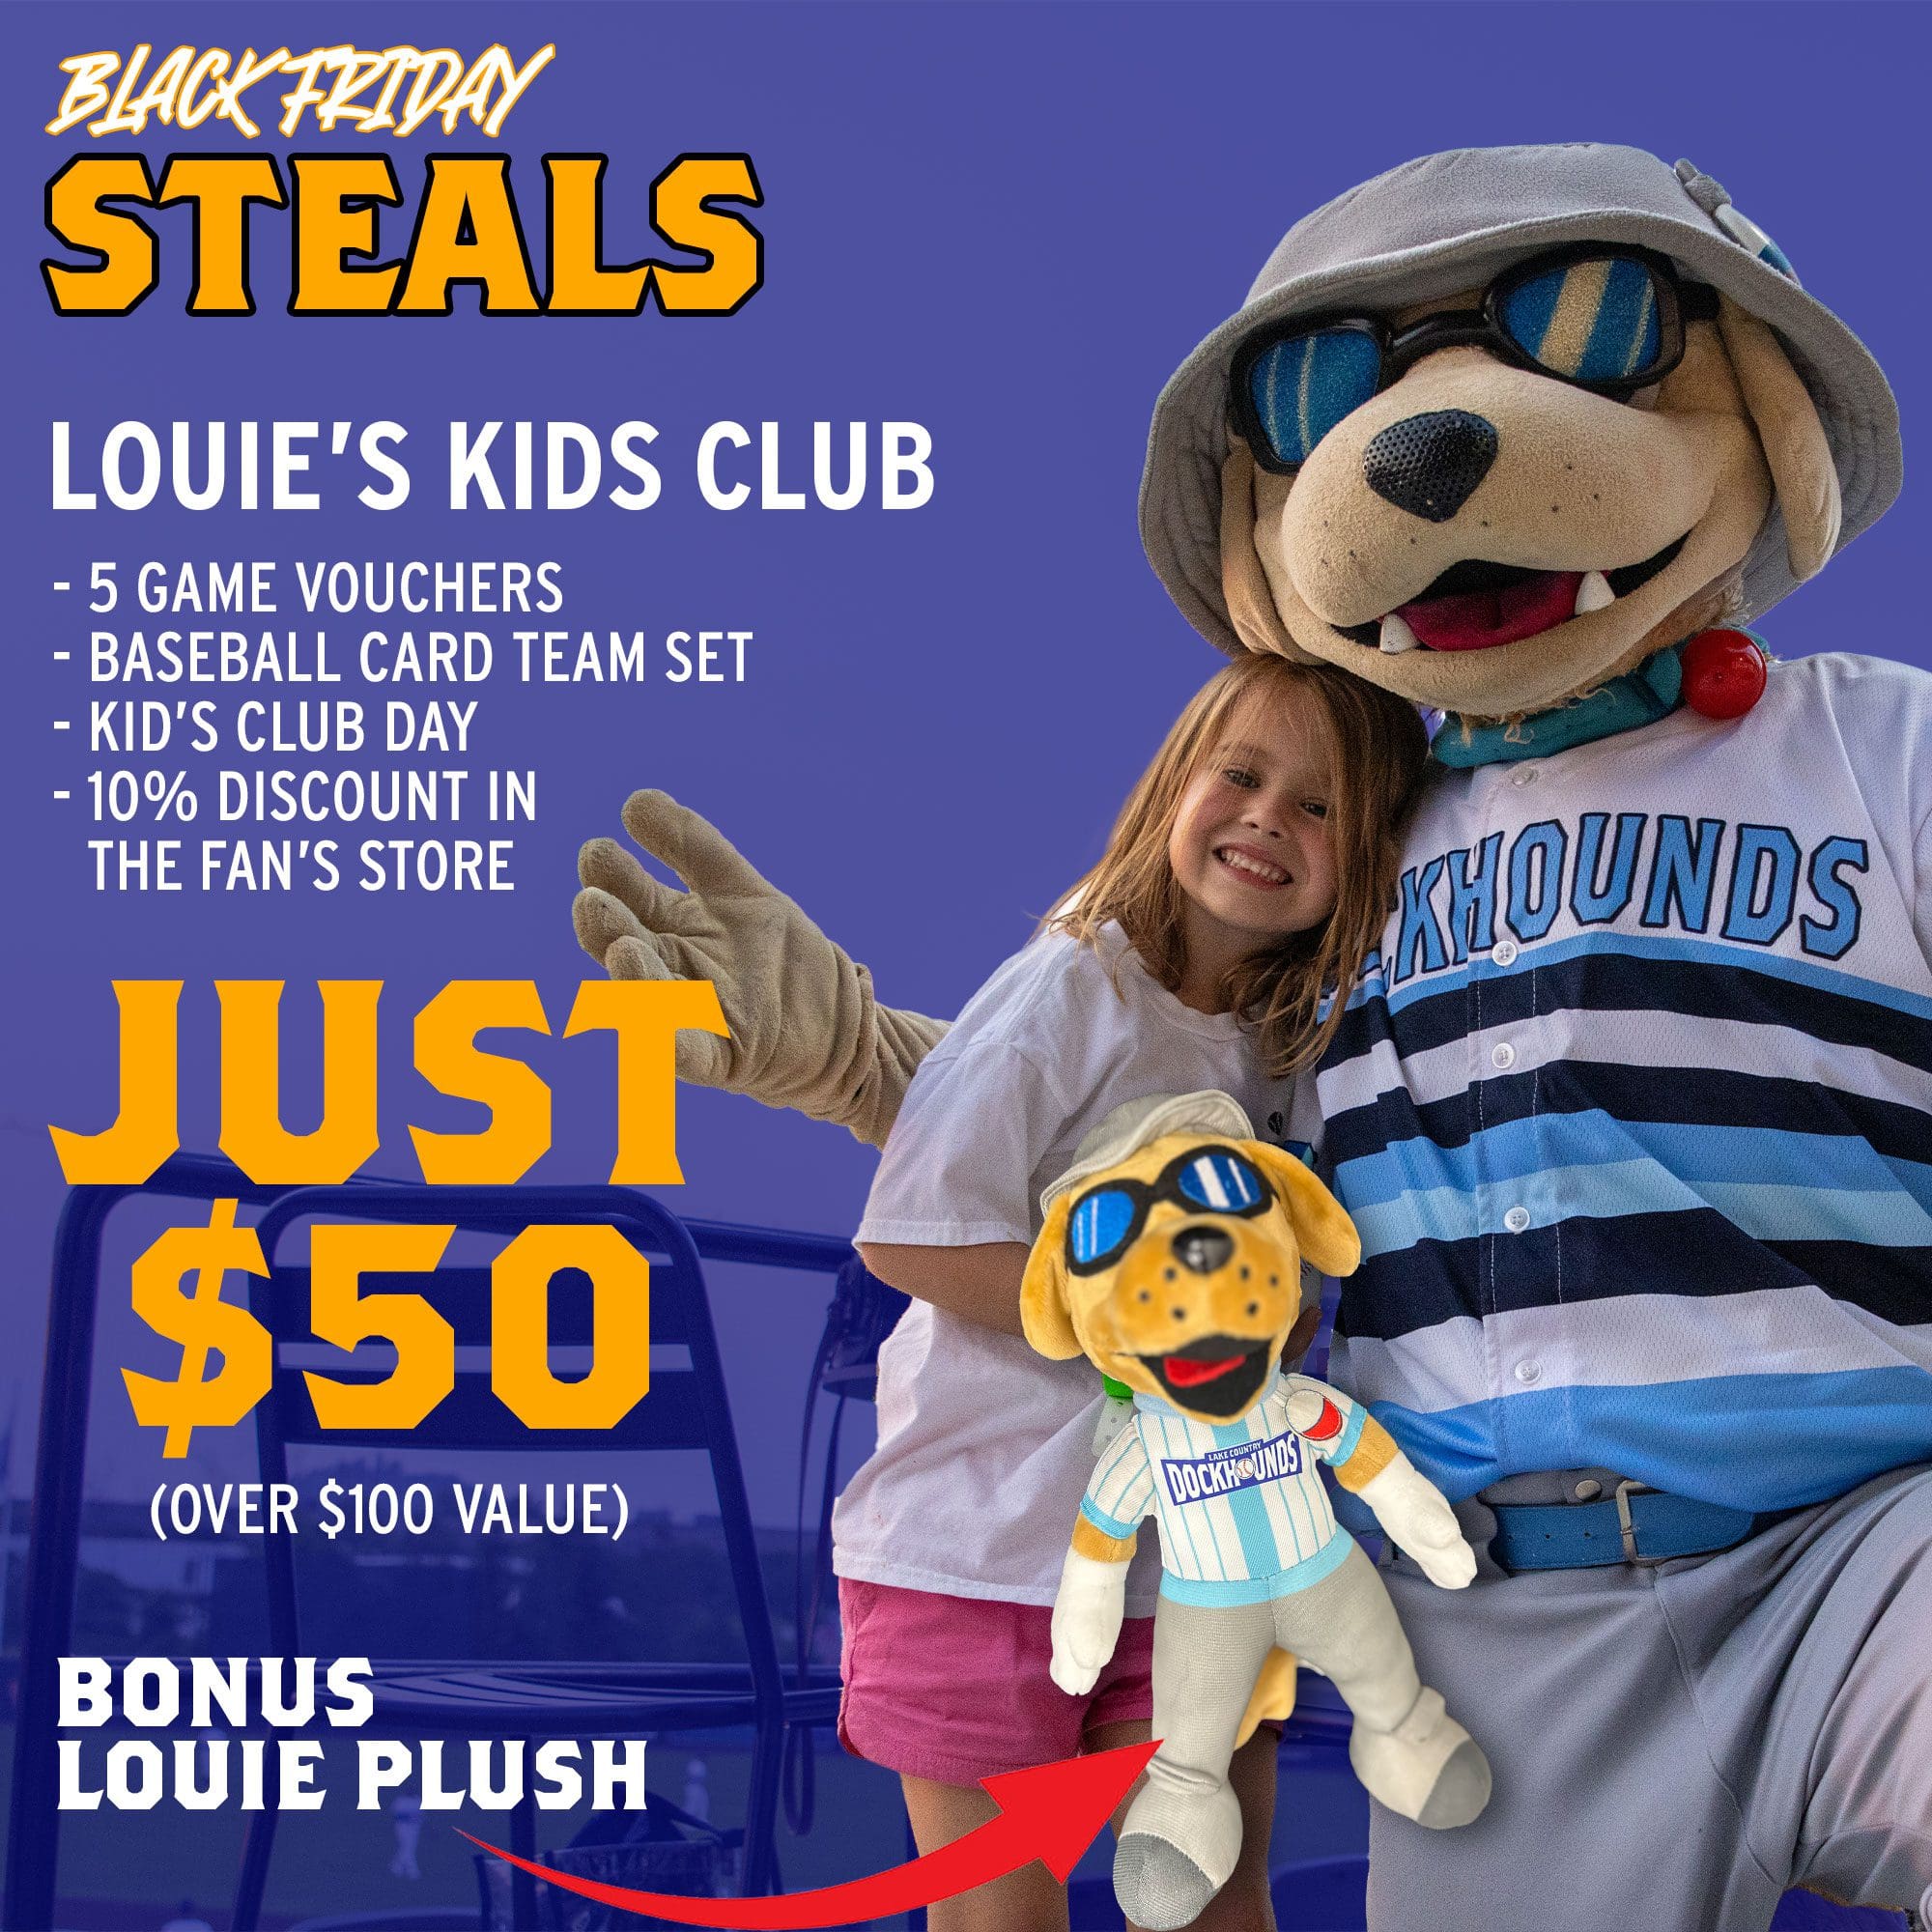 Louie's Kids Club Black Friday Steal